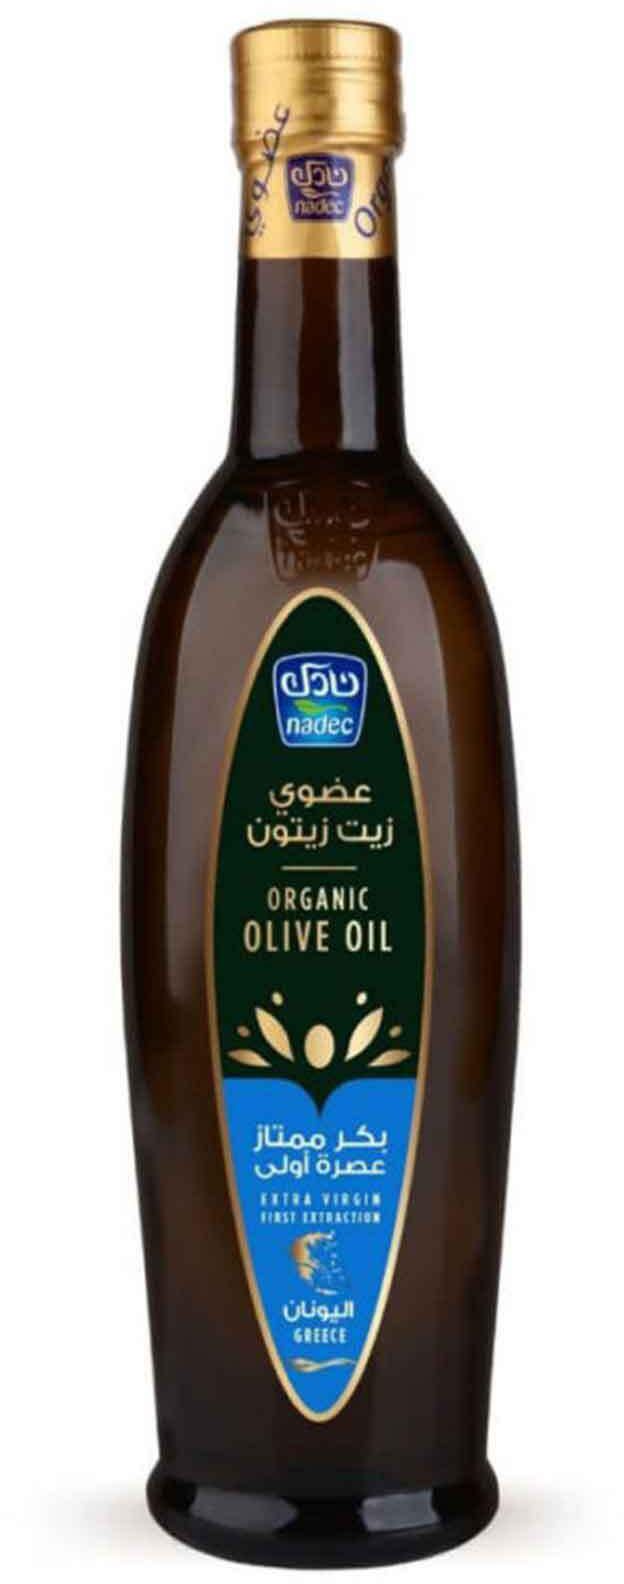 Nadec organic extra virgin olive oil 250ml